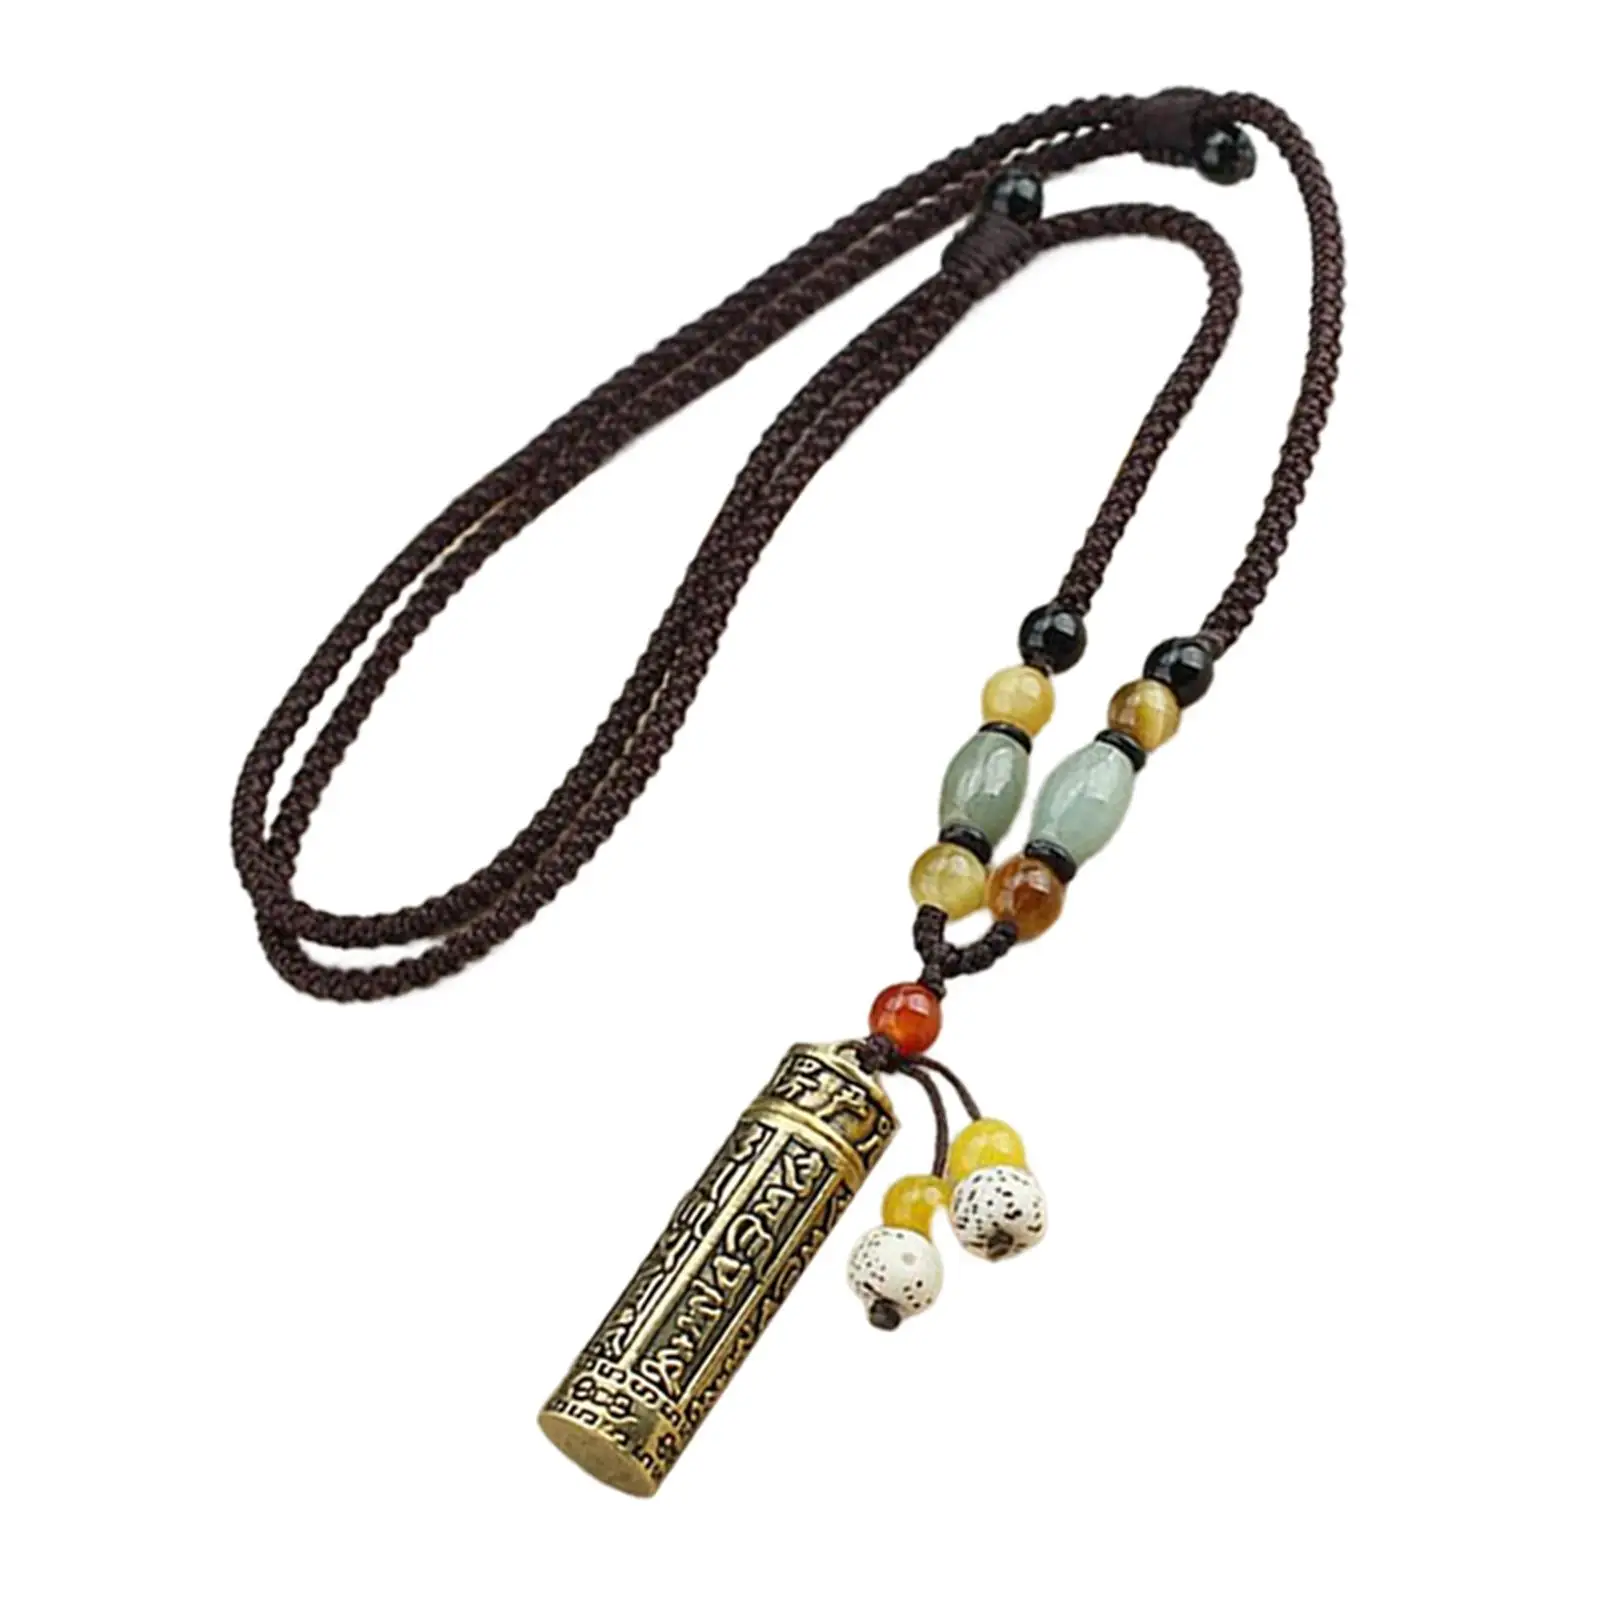 Tibetan Gawu Box Pendant Necklace Prayer Collection Buddhist Praying Accs Amulet Religious Jewelry Buddhist Amulet Necklace